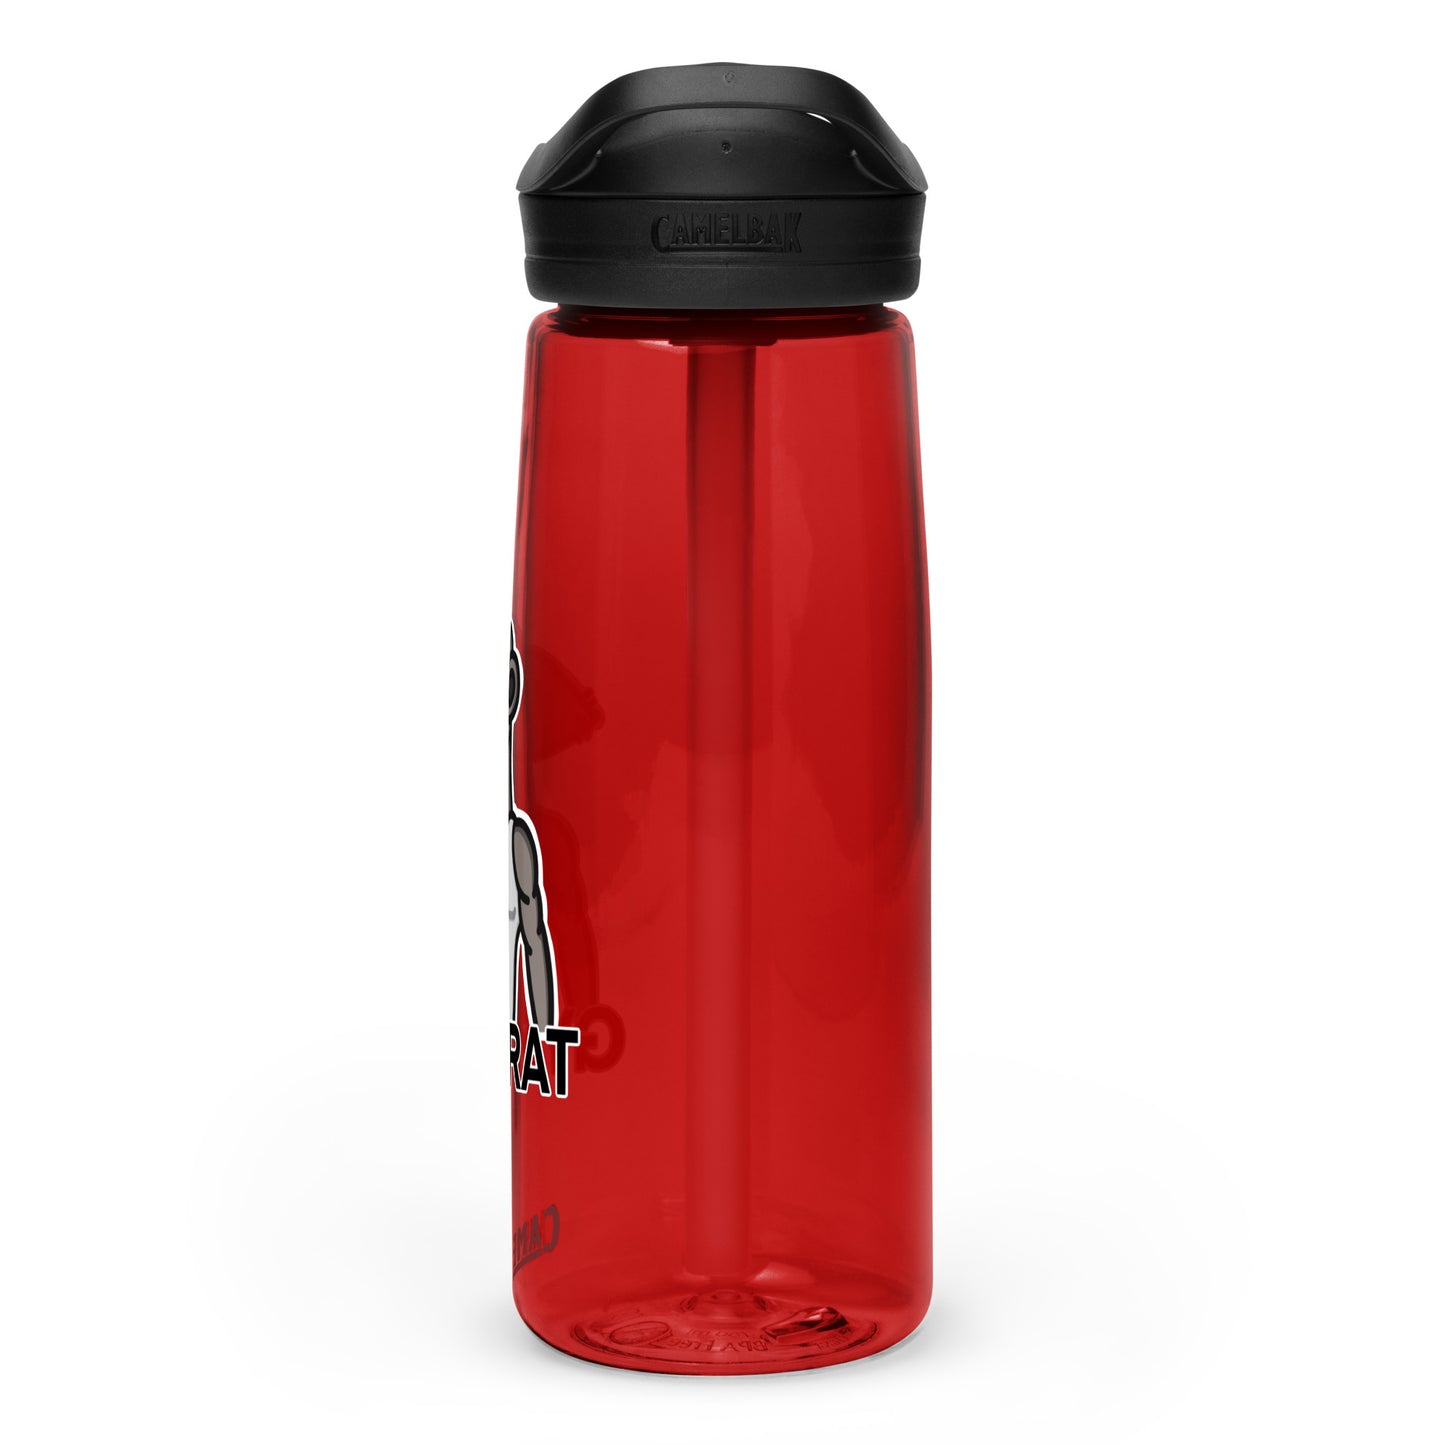 “Gym Rat” Sports water bottle